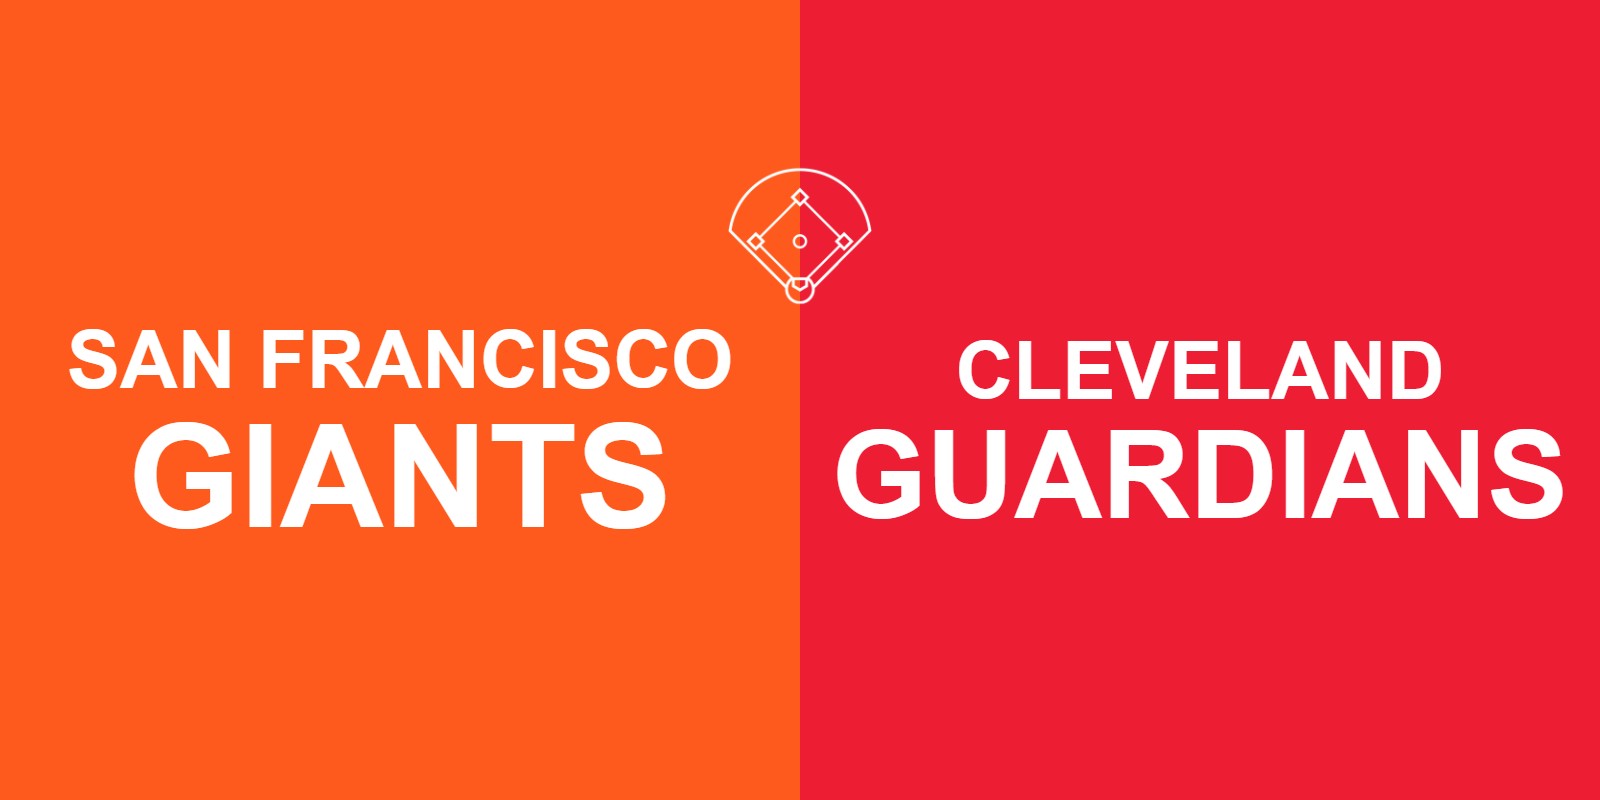 Giants vs Guardians Tickets